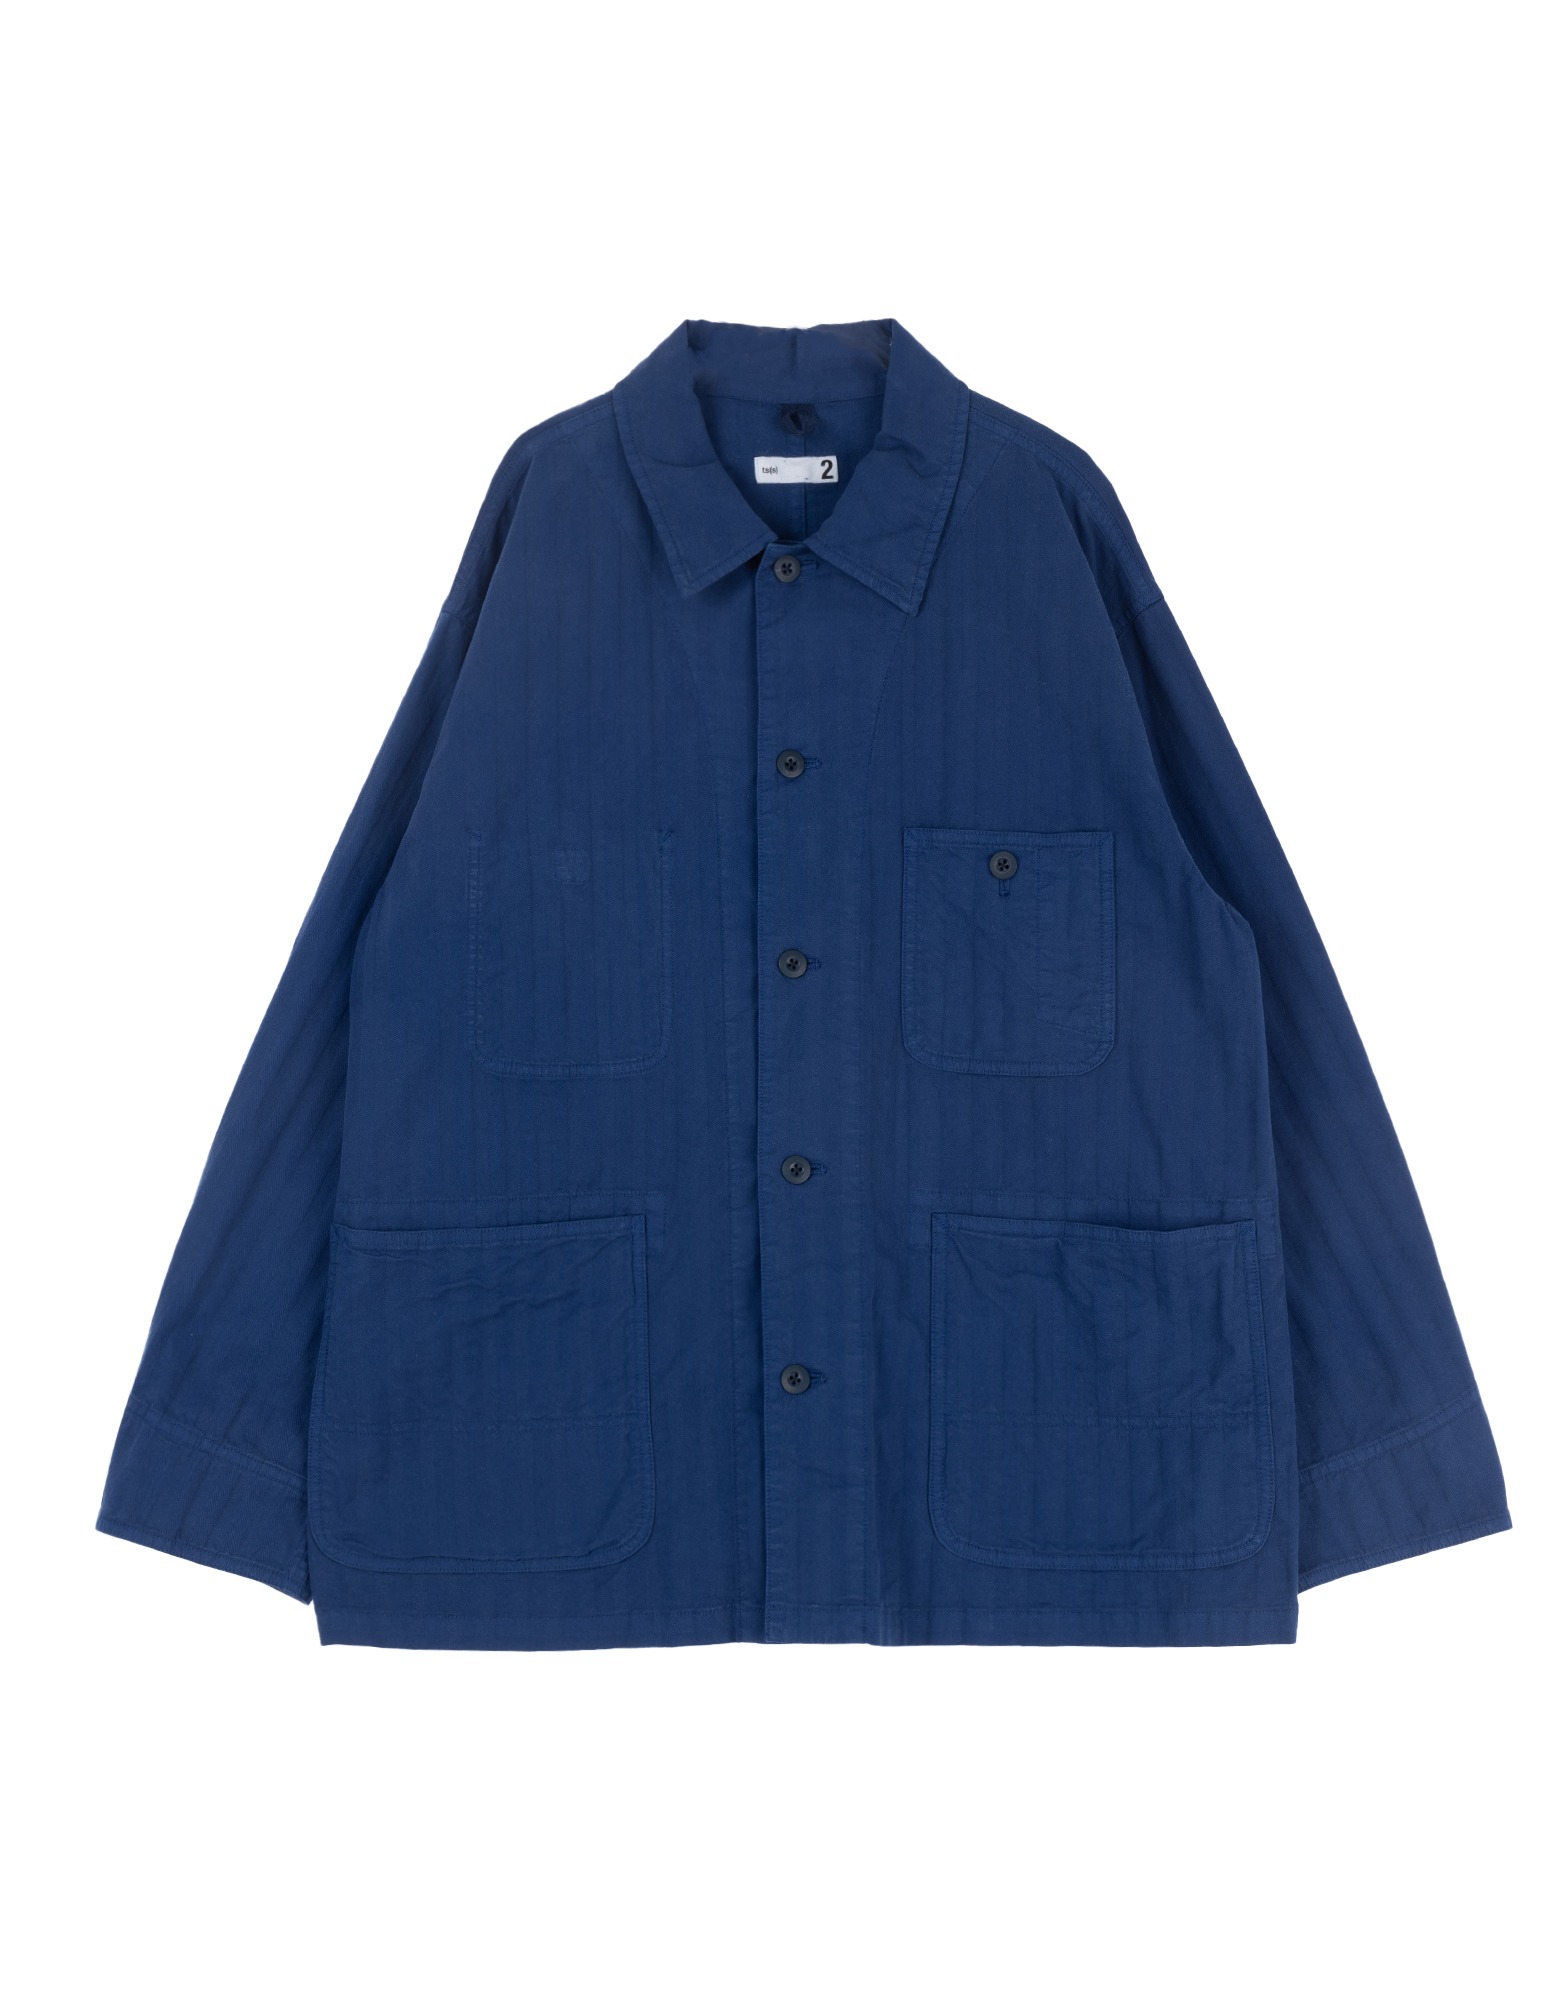 Garment Dye Coverall Jacket (Royal)